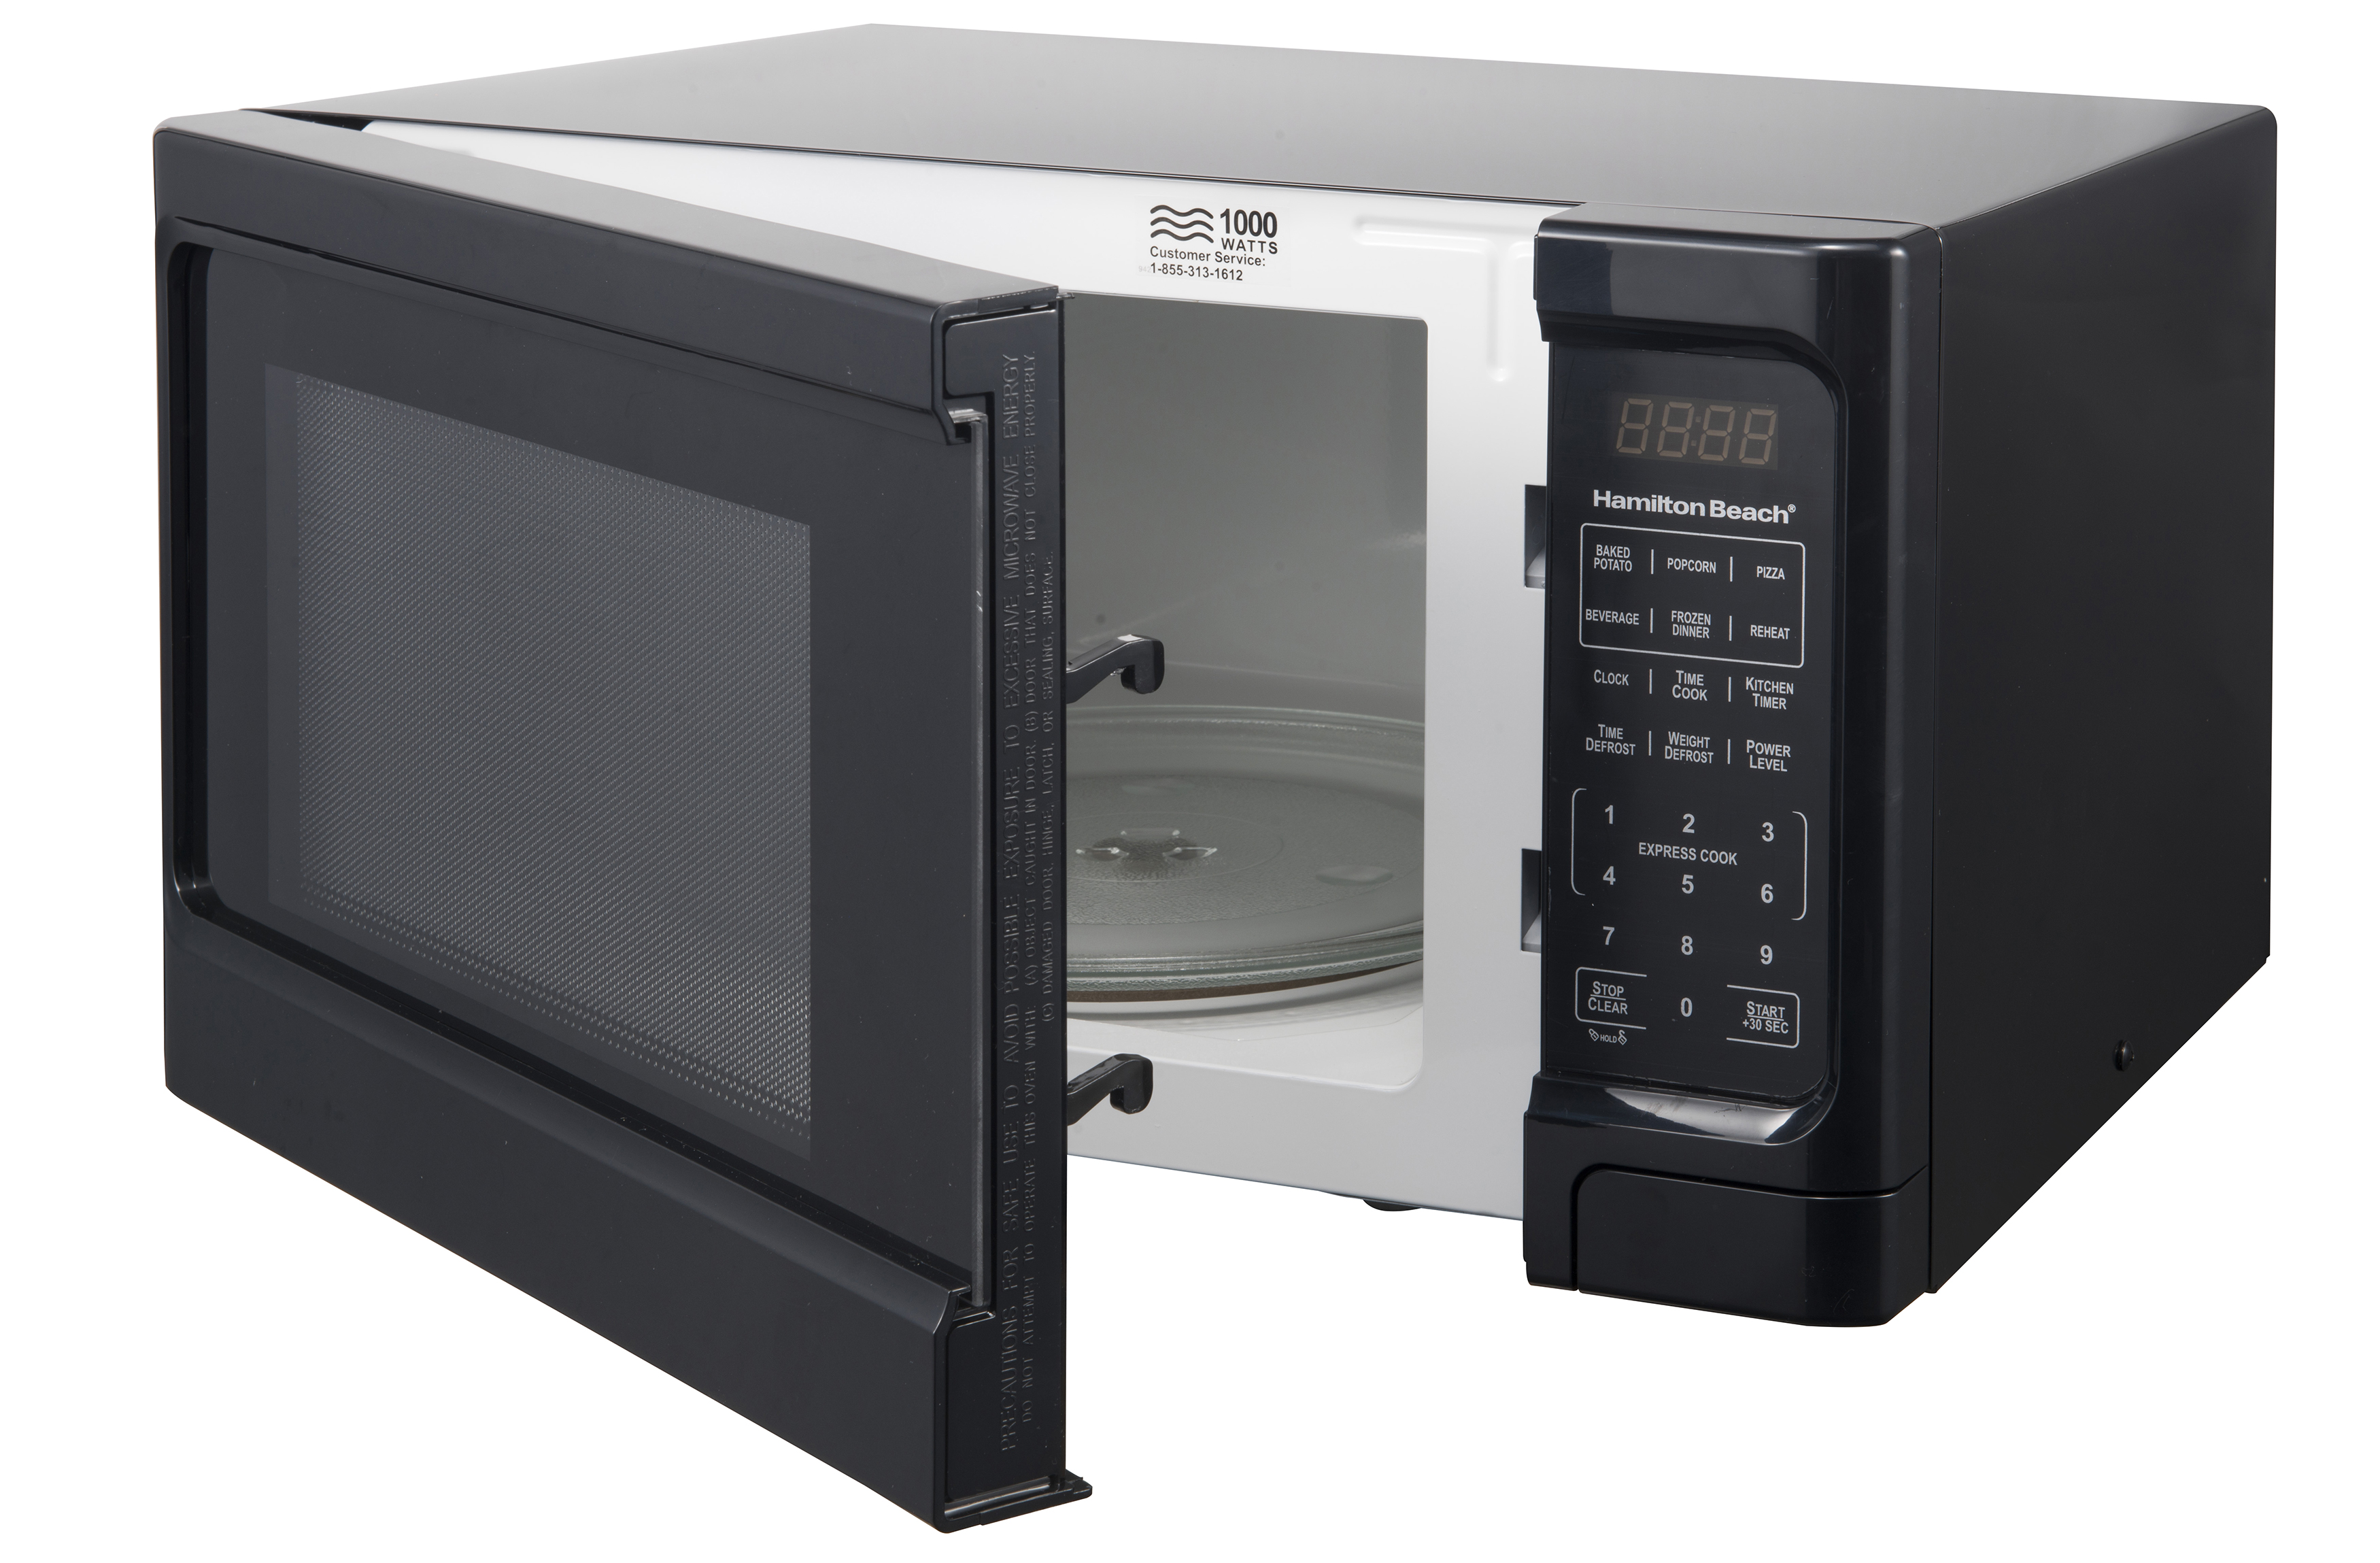 Hamilton Beach 1.1 cu. ft. Countertop Microwave Oven, 1000 Watts, Black - image 3 of 9